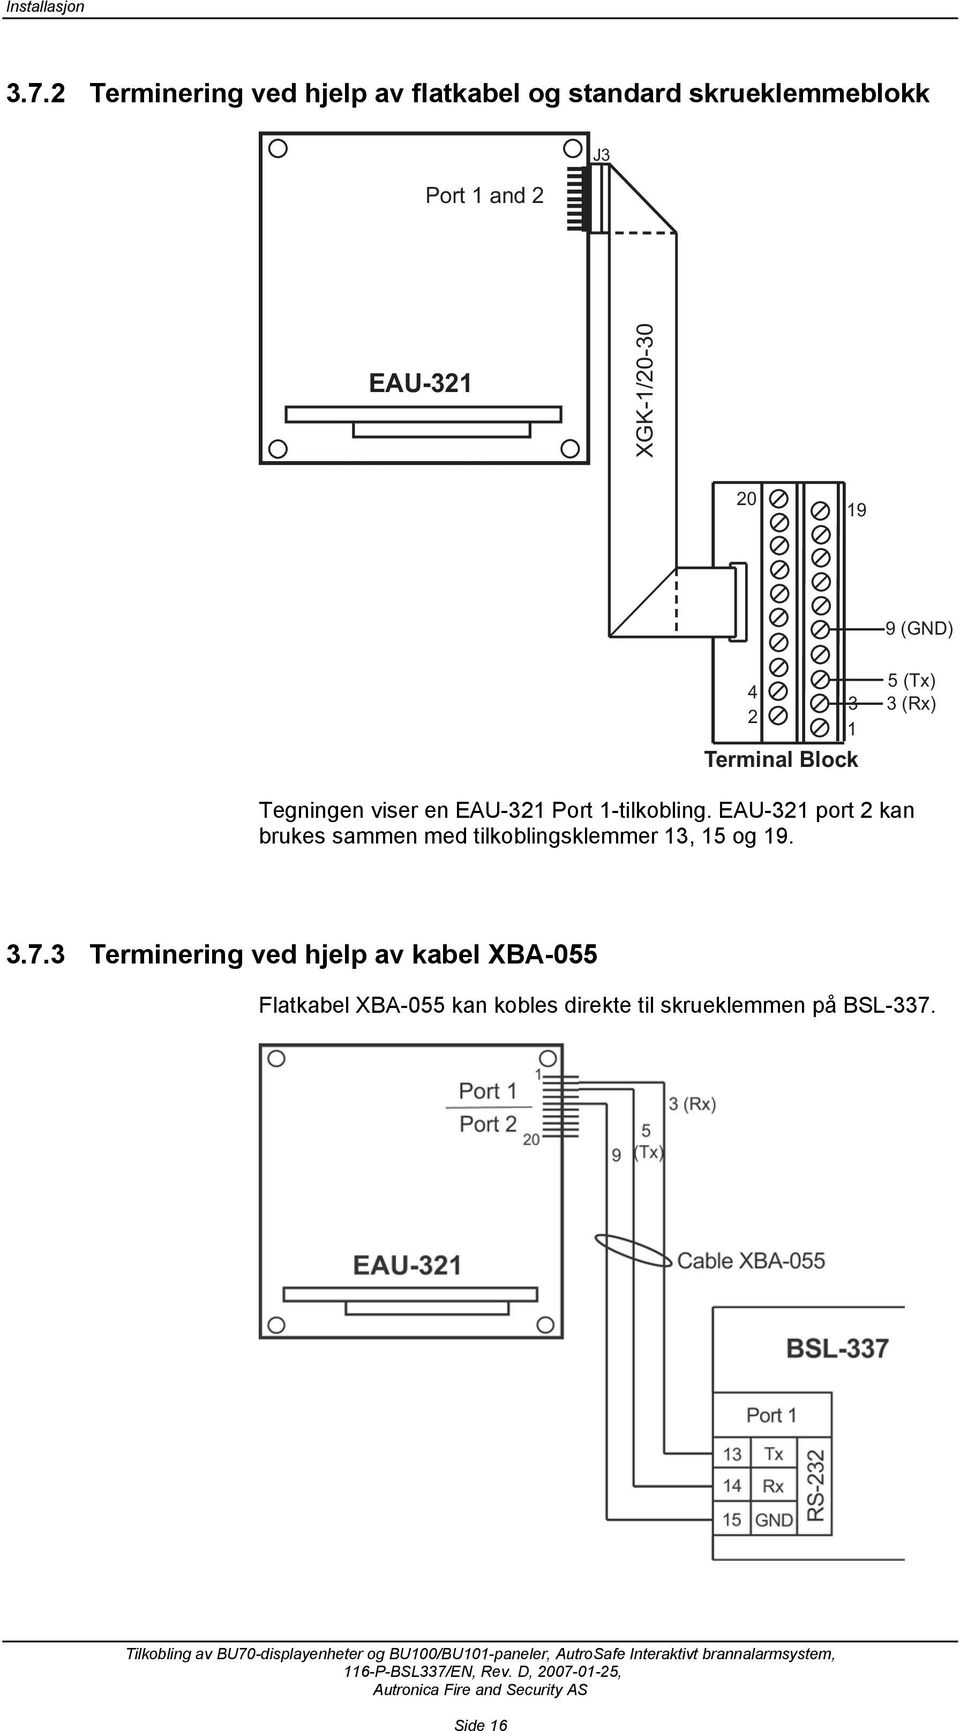 XGK-1/20-30 20 19 9 (GND) 4 2 3 1 Terminal Block 5 (Tx) 3 (Rx) Tegningen viser en EAU-321 Port